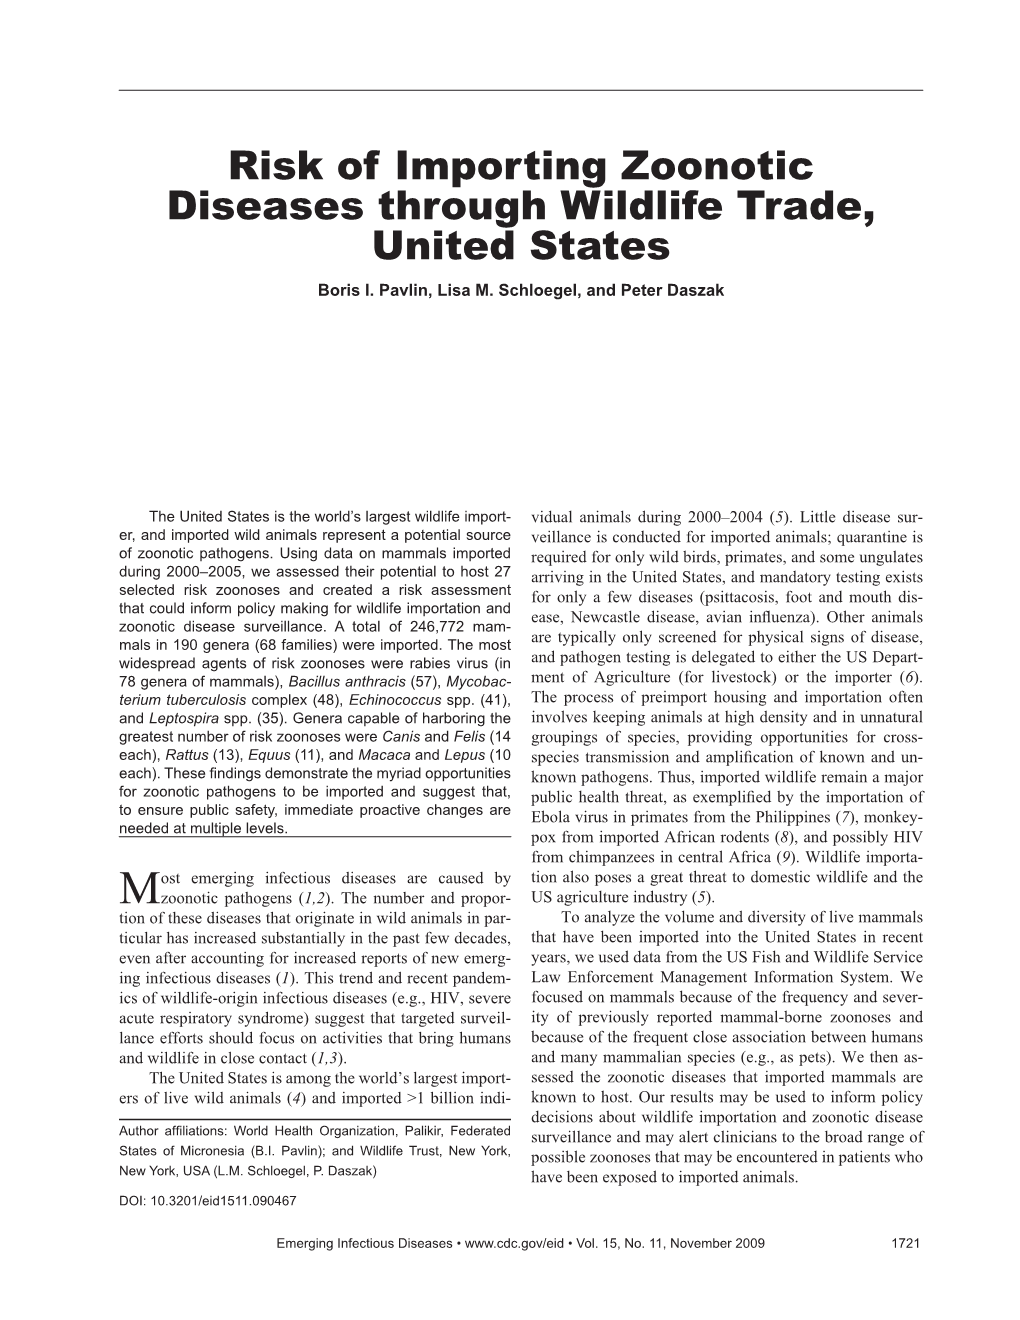 Risk of Importing Zoonotic Diseases Through Wildlife Trade, United States Boris I